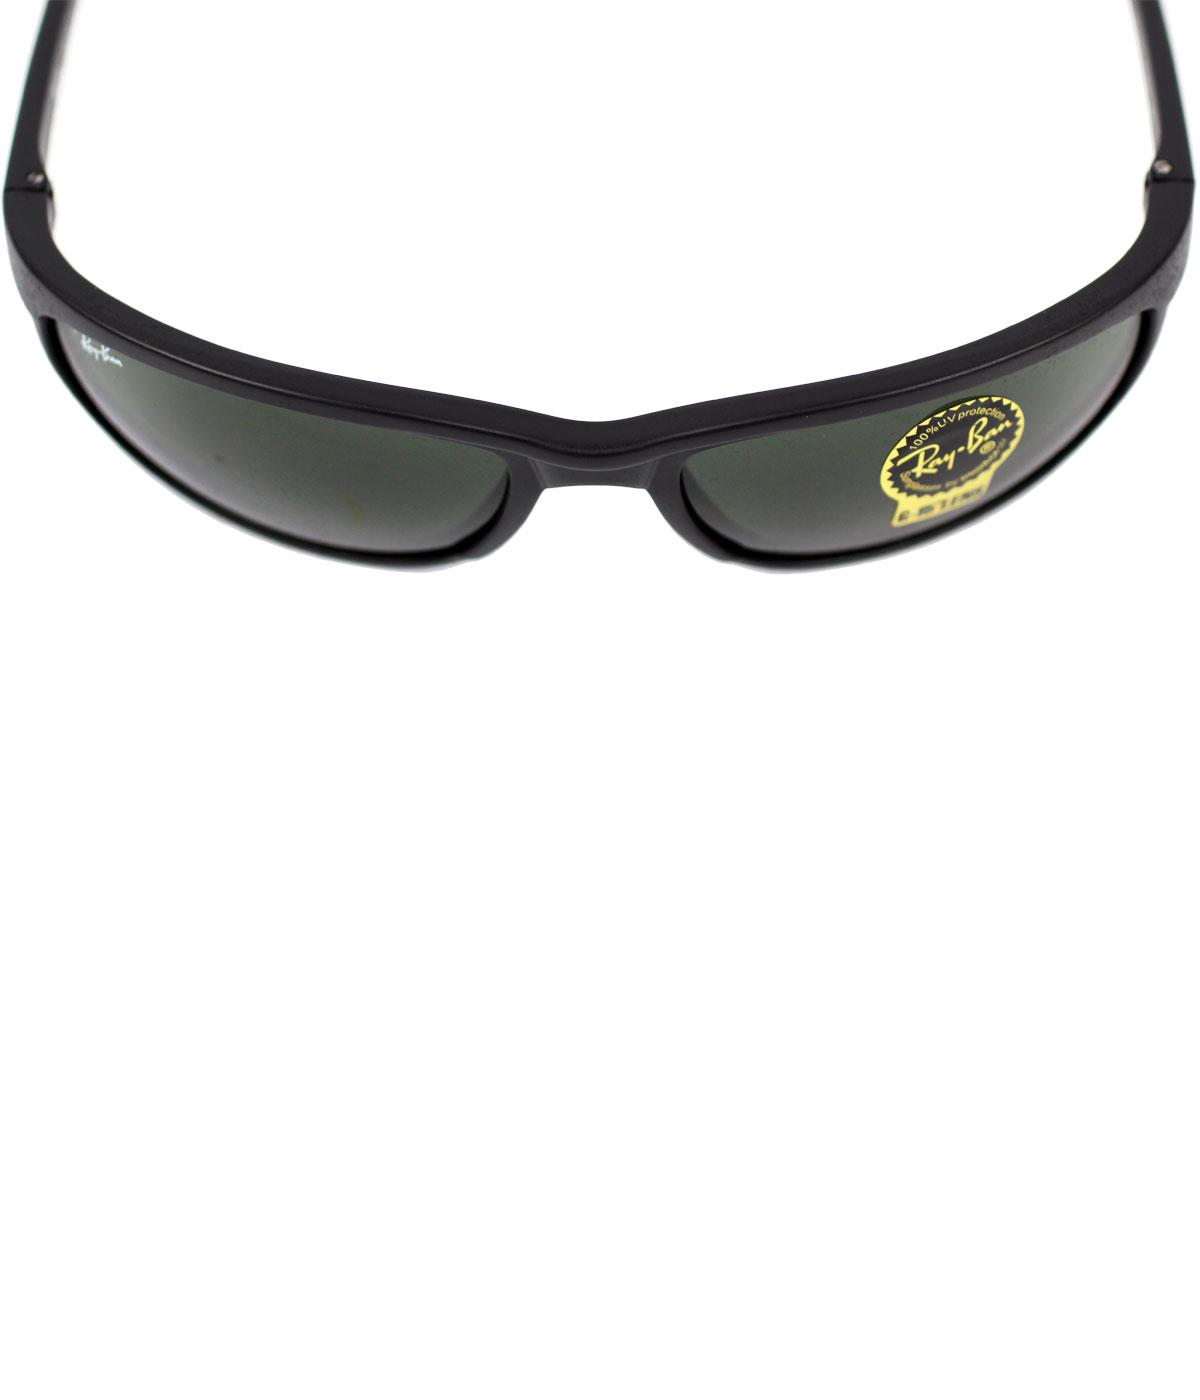 Ray-Ban Predator Retro G-15 Green Lens Wrap Round Sunglasses